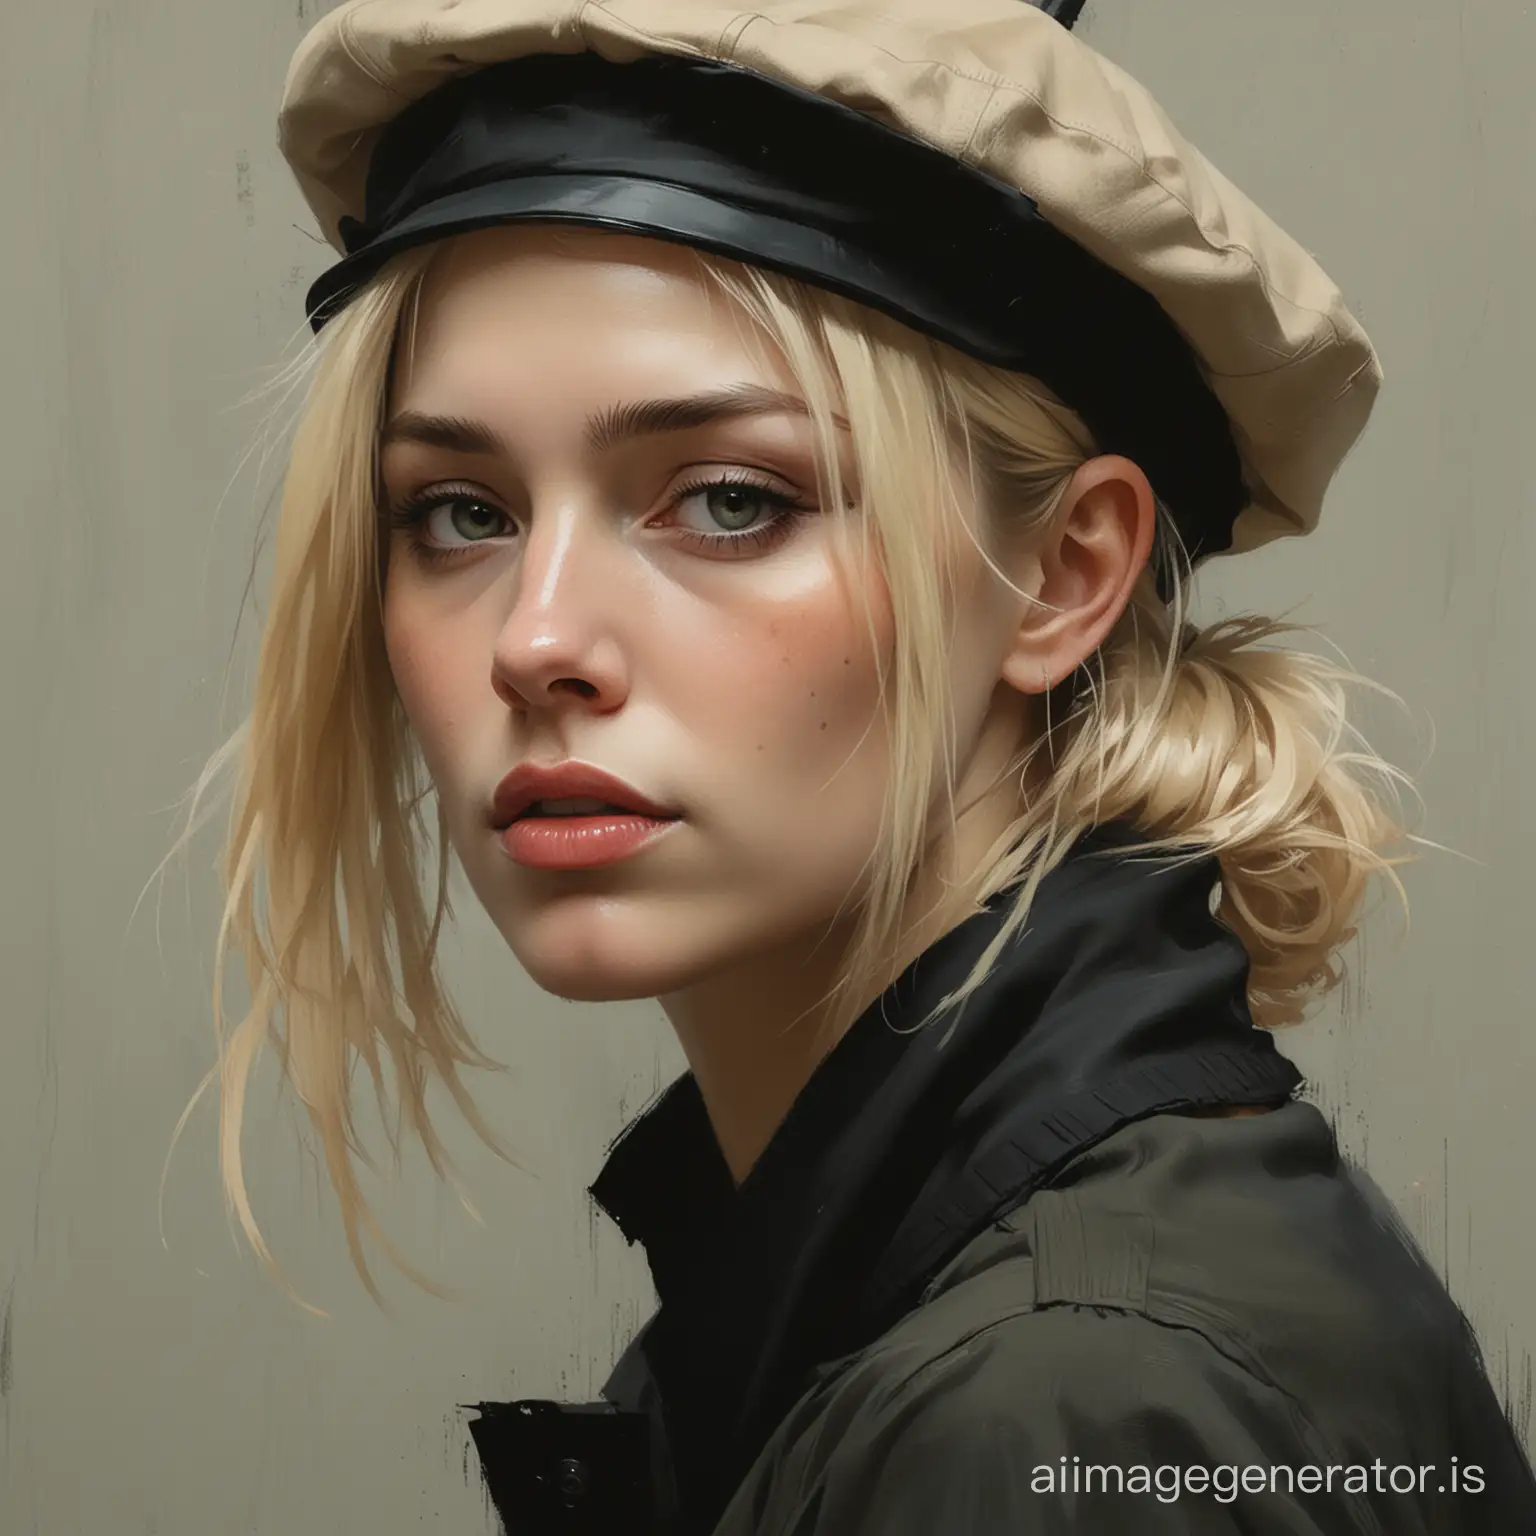 Jeremy-Mann-Style-Portrait-CloseUp-of-a-Sad-Blonde-Woman-in-Beret